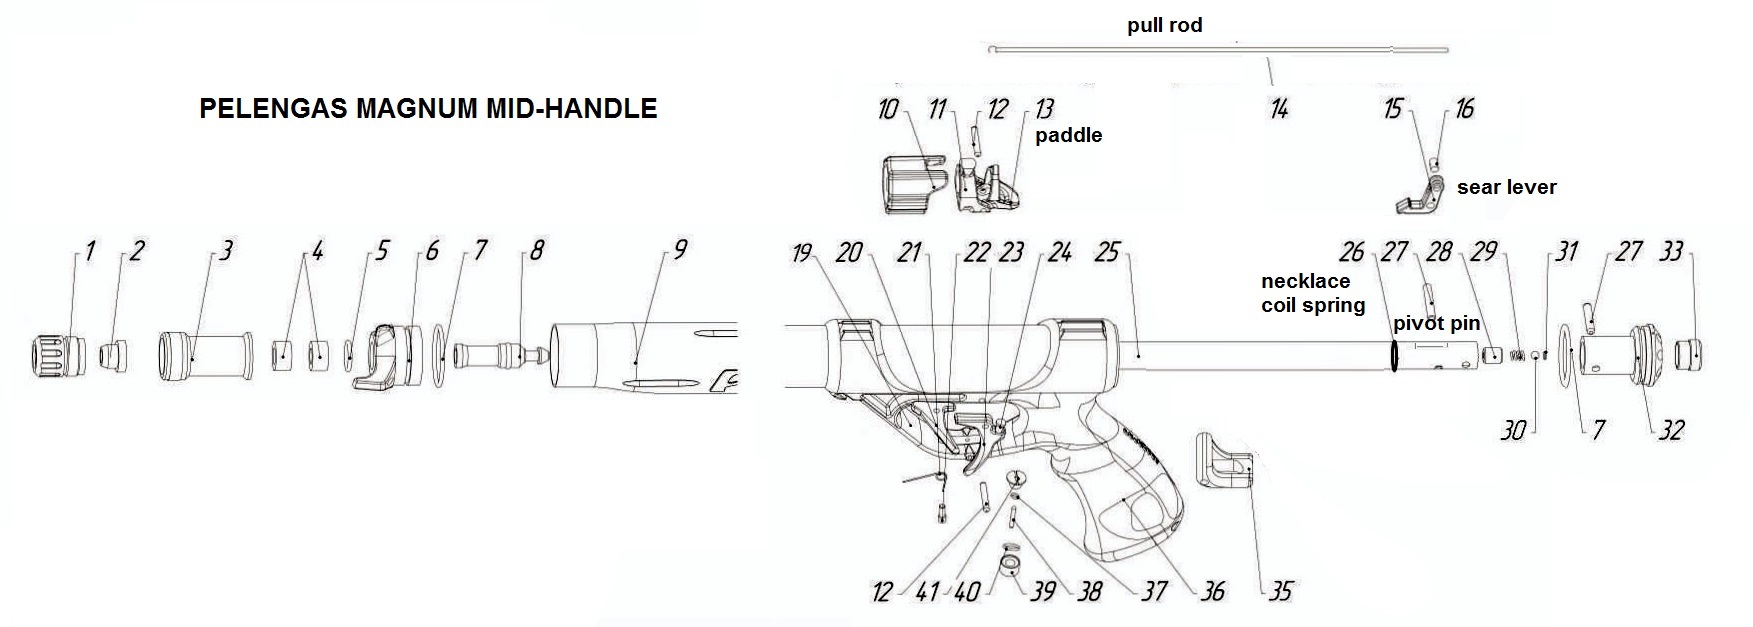 Pelengas parts diagram mid handle.jpg